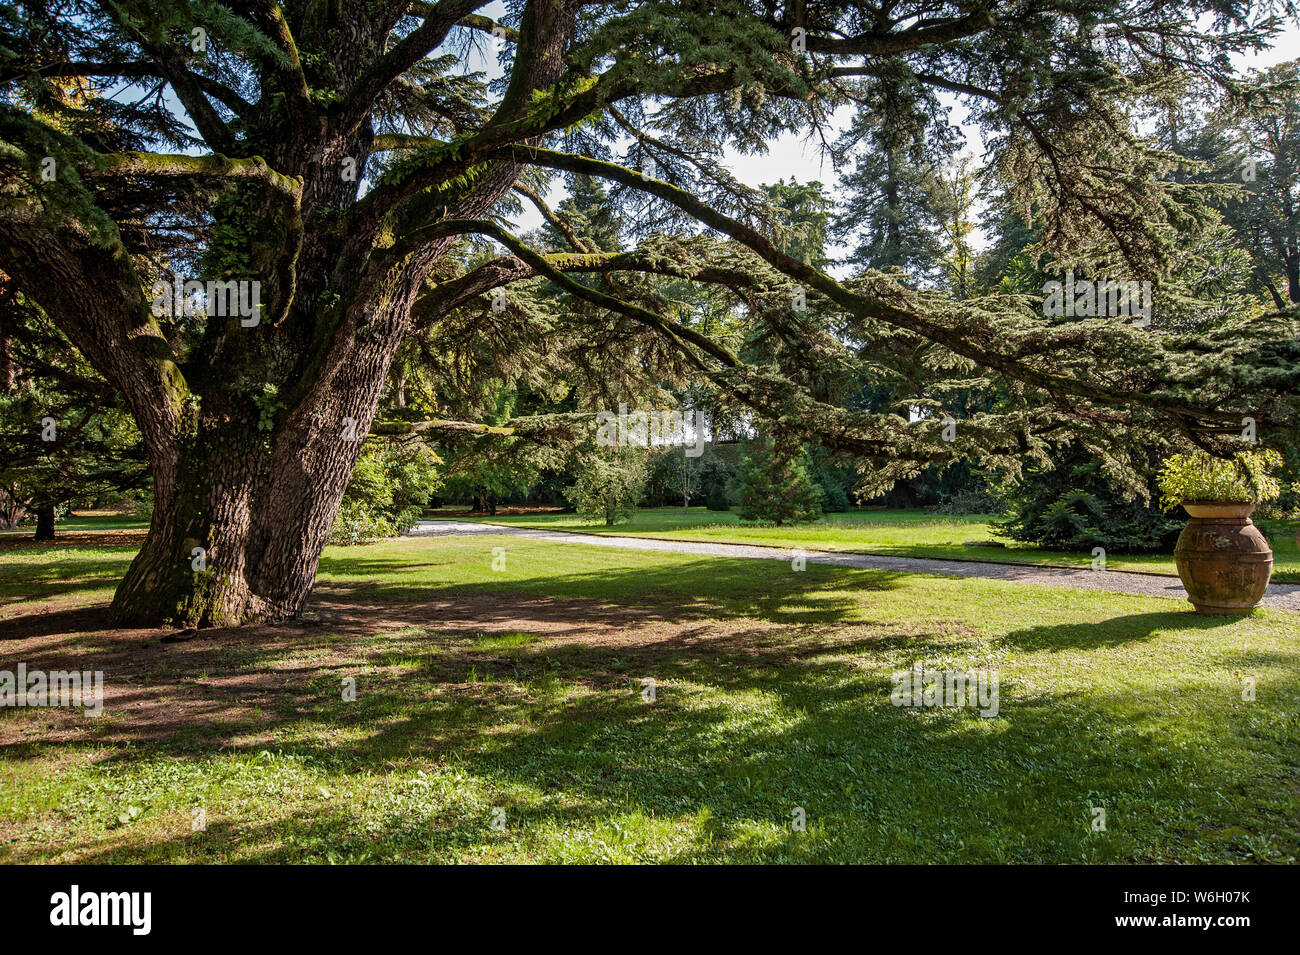 Monumental Cedrus libani tree in a park. Stock Photo